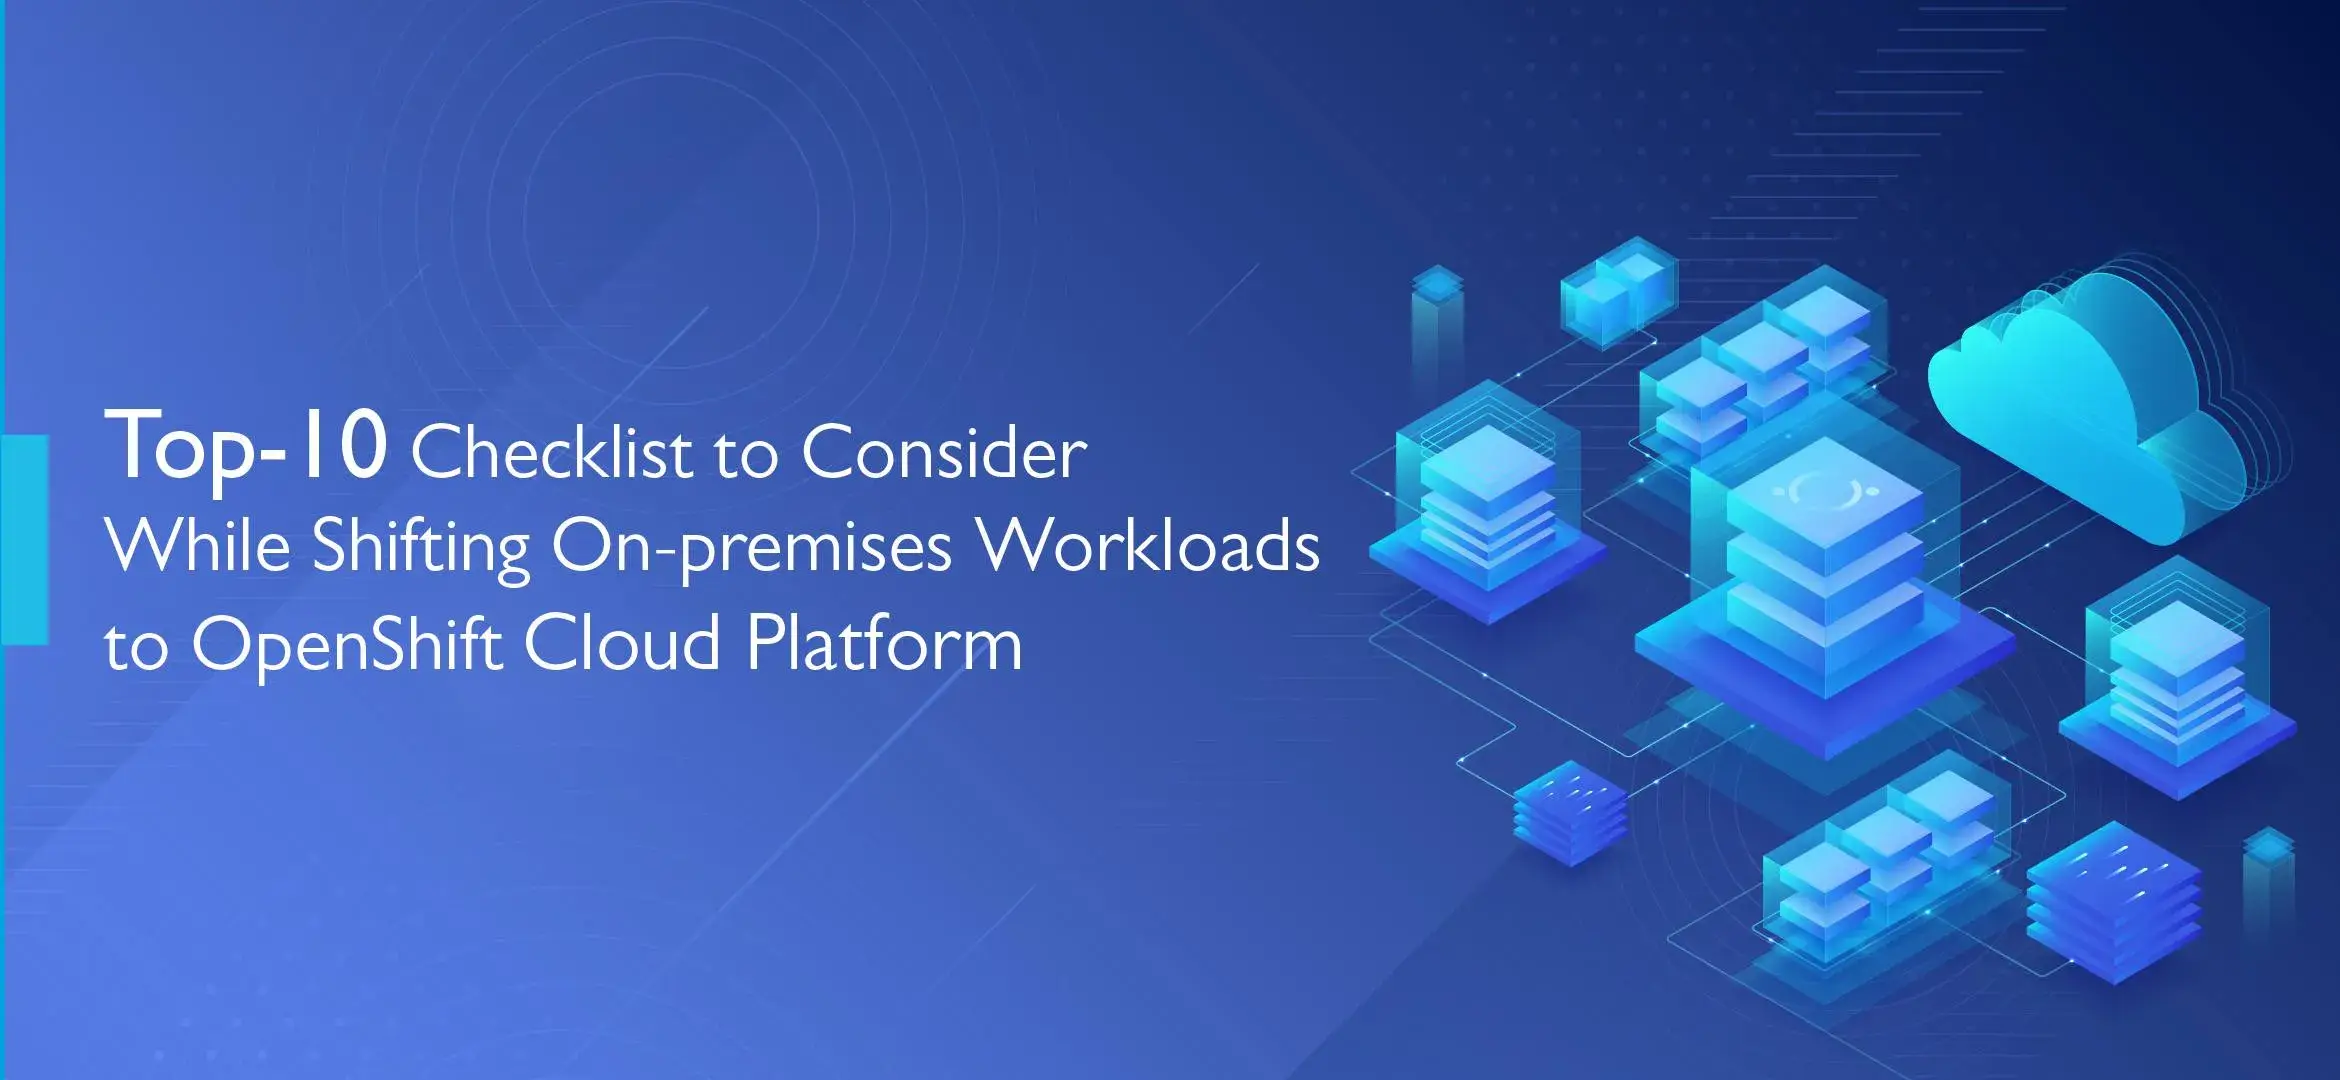 1712232606Top-10 Checklist to Consider While Shifting On-premises Workloads to OpenShift Cloud Platform.webp